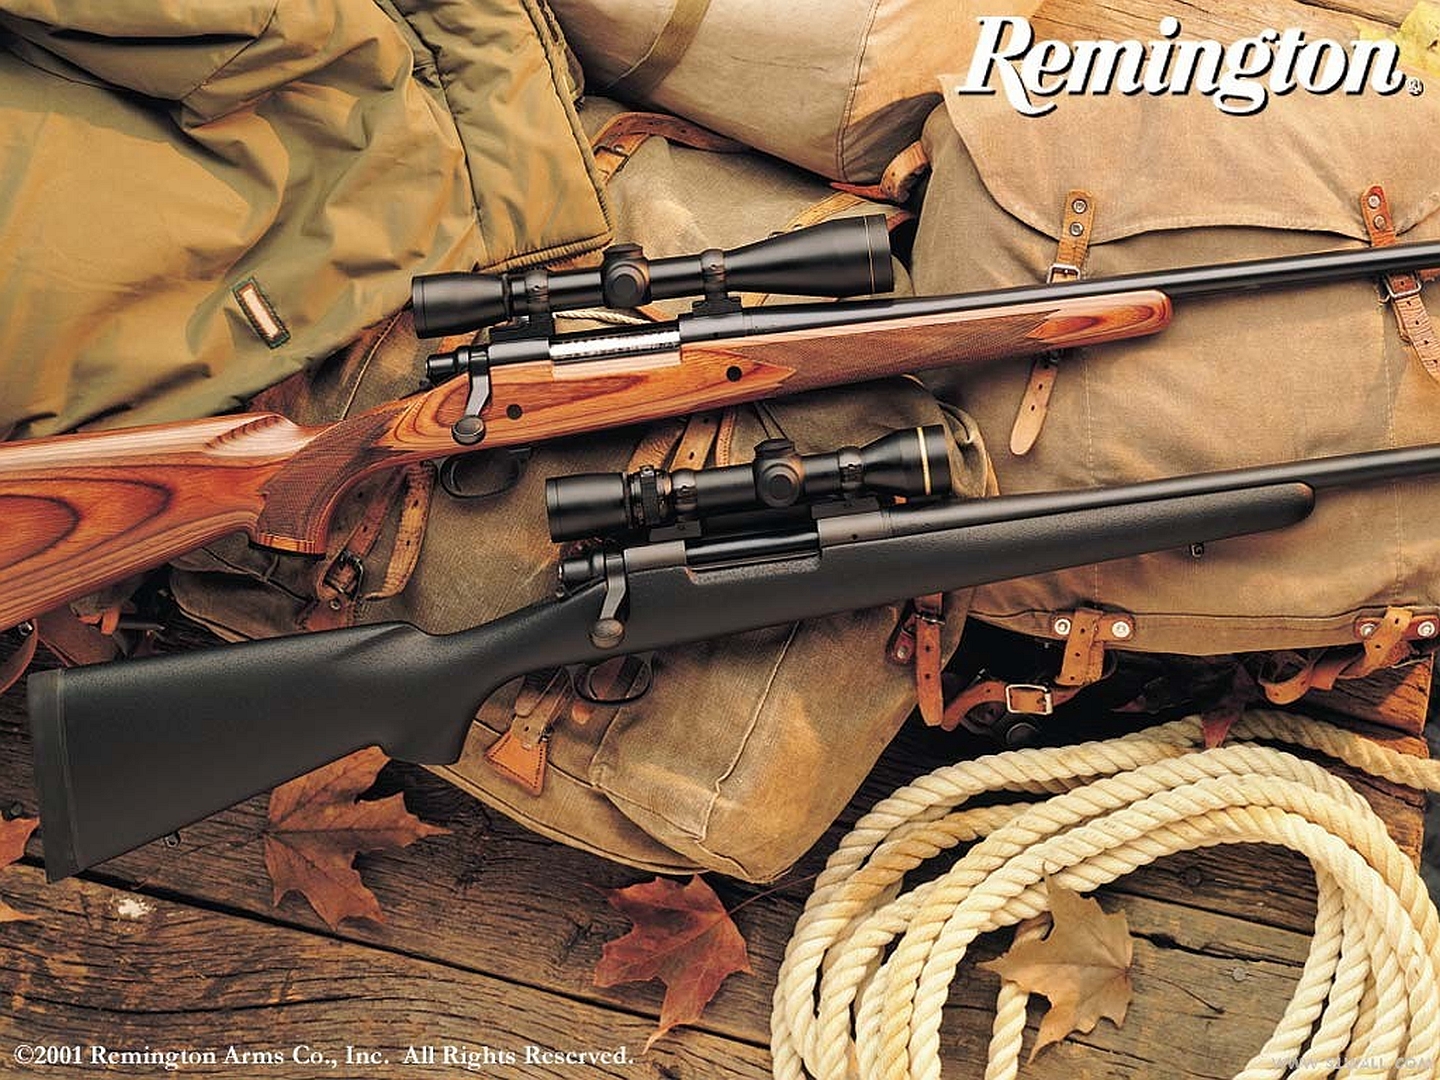 Baixar papel de parede para celular de Armas, Rifle Remington gratuito.